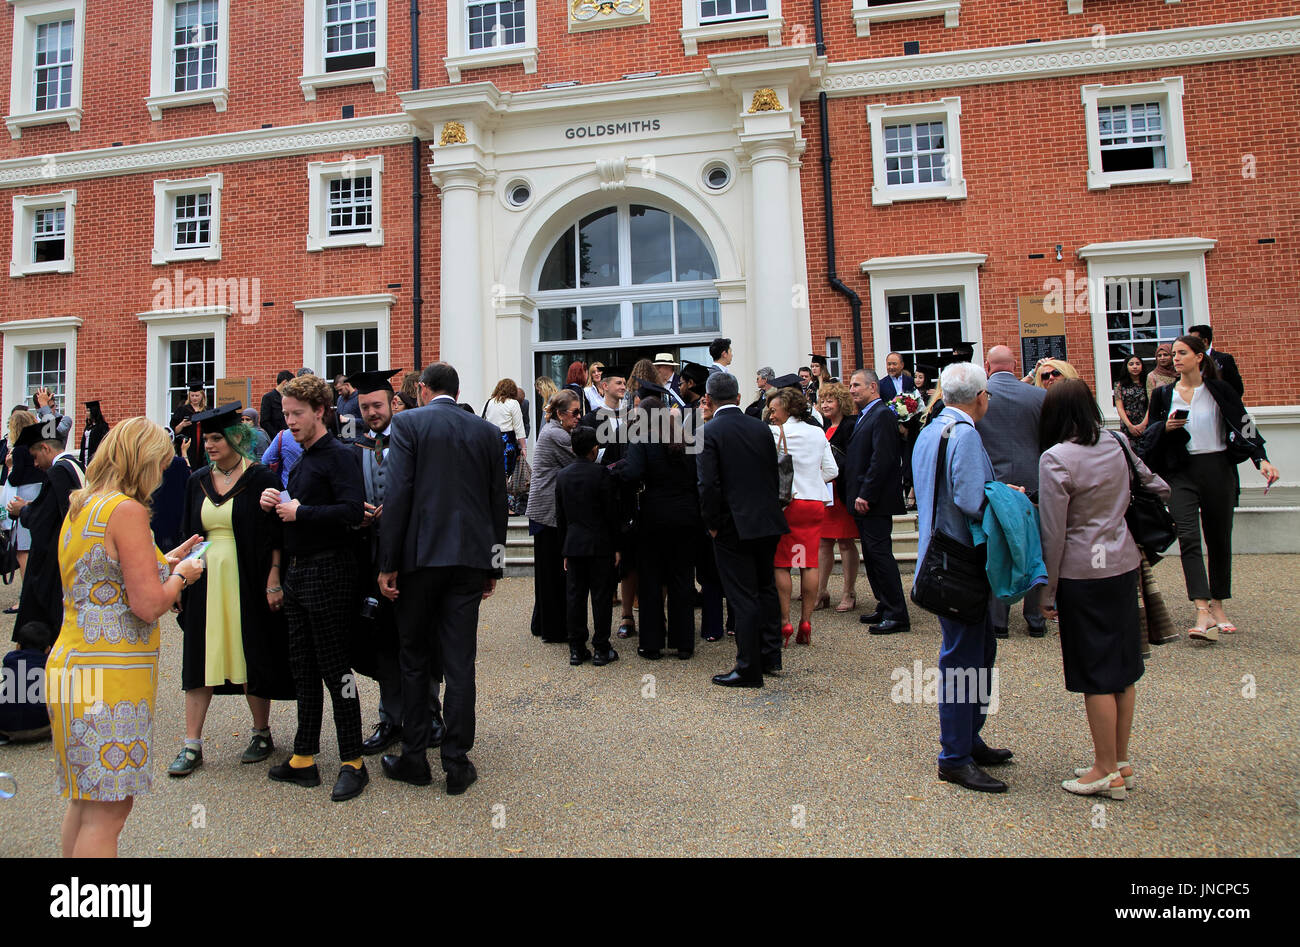 People at graduation ceremony, Goldsmiths college building, University of London, England, UK Stock Photo